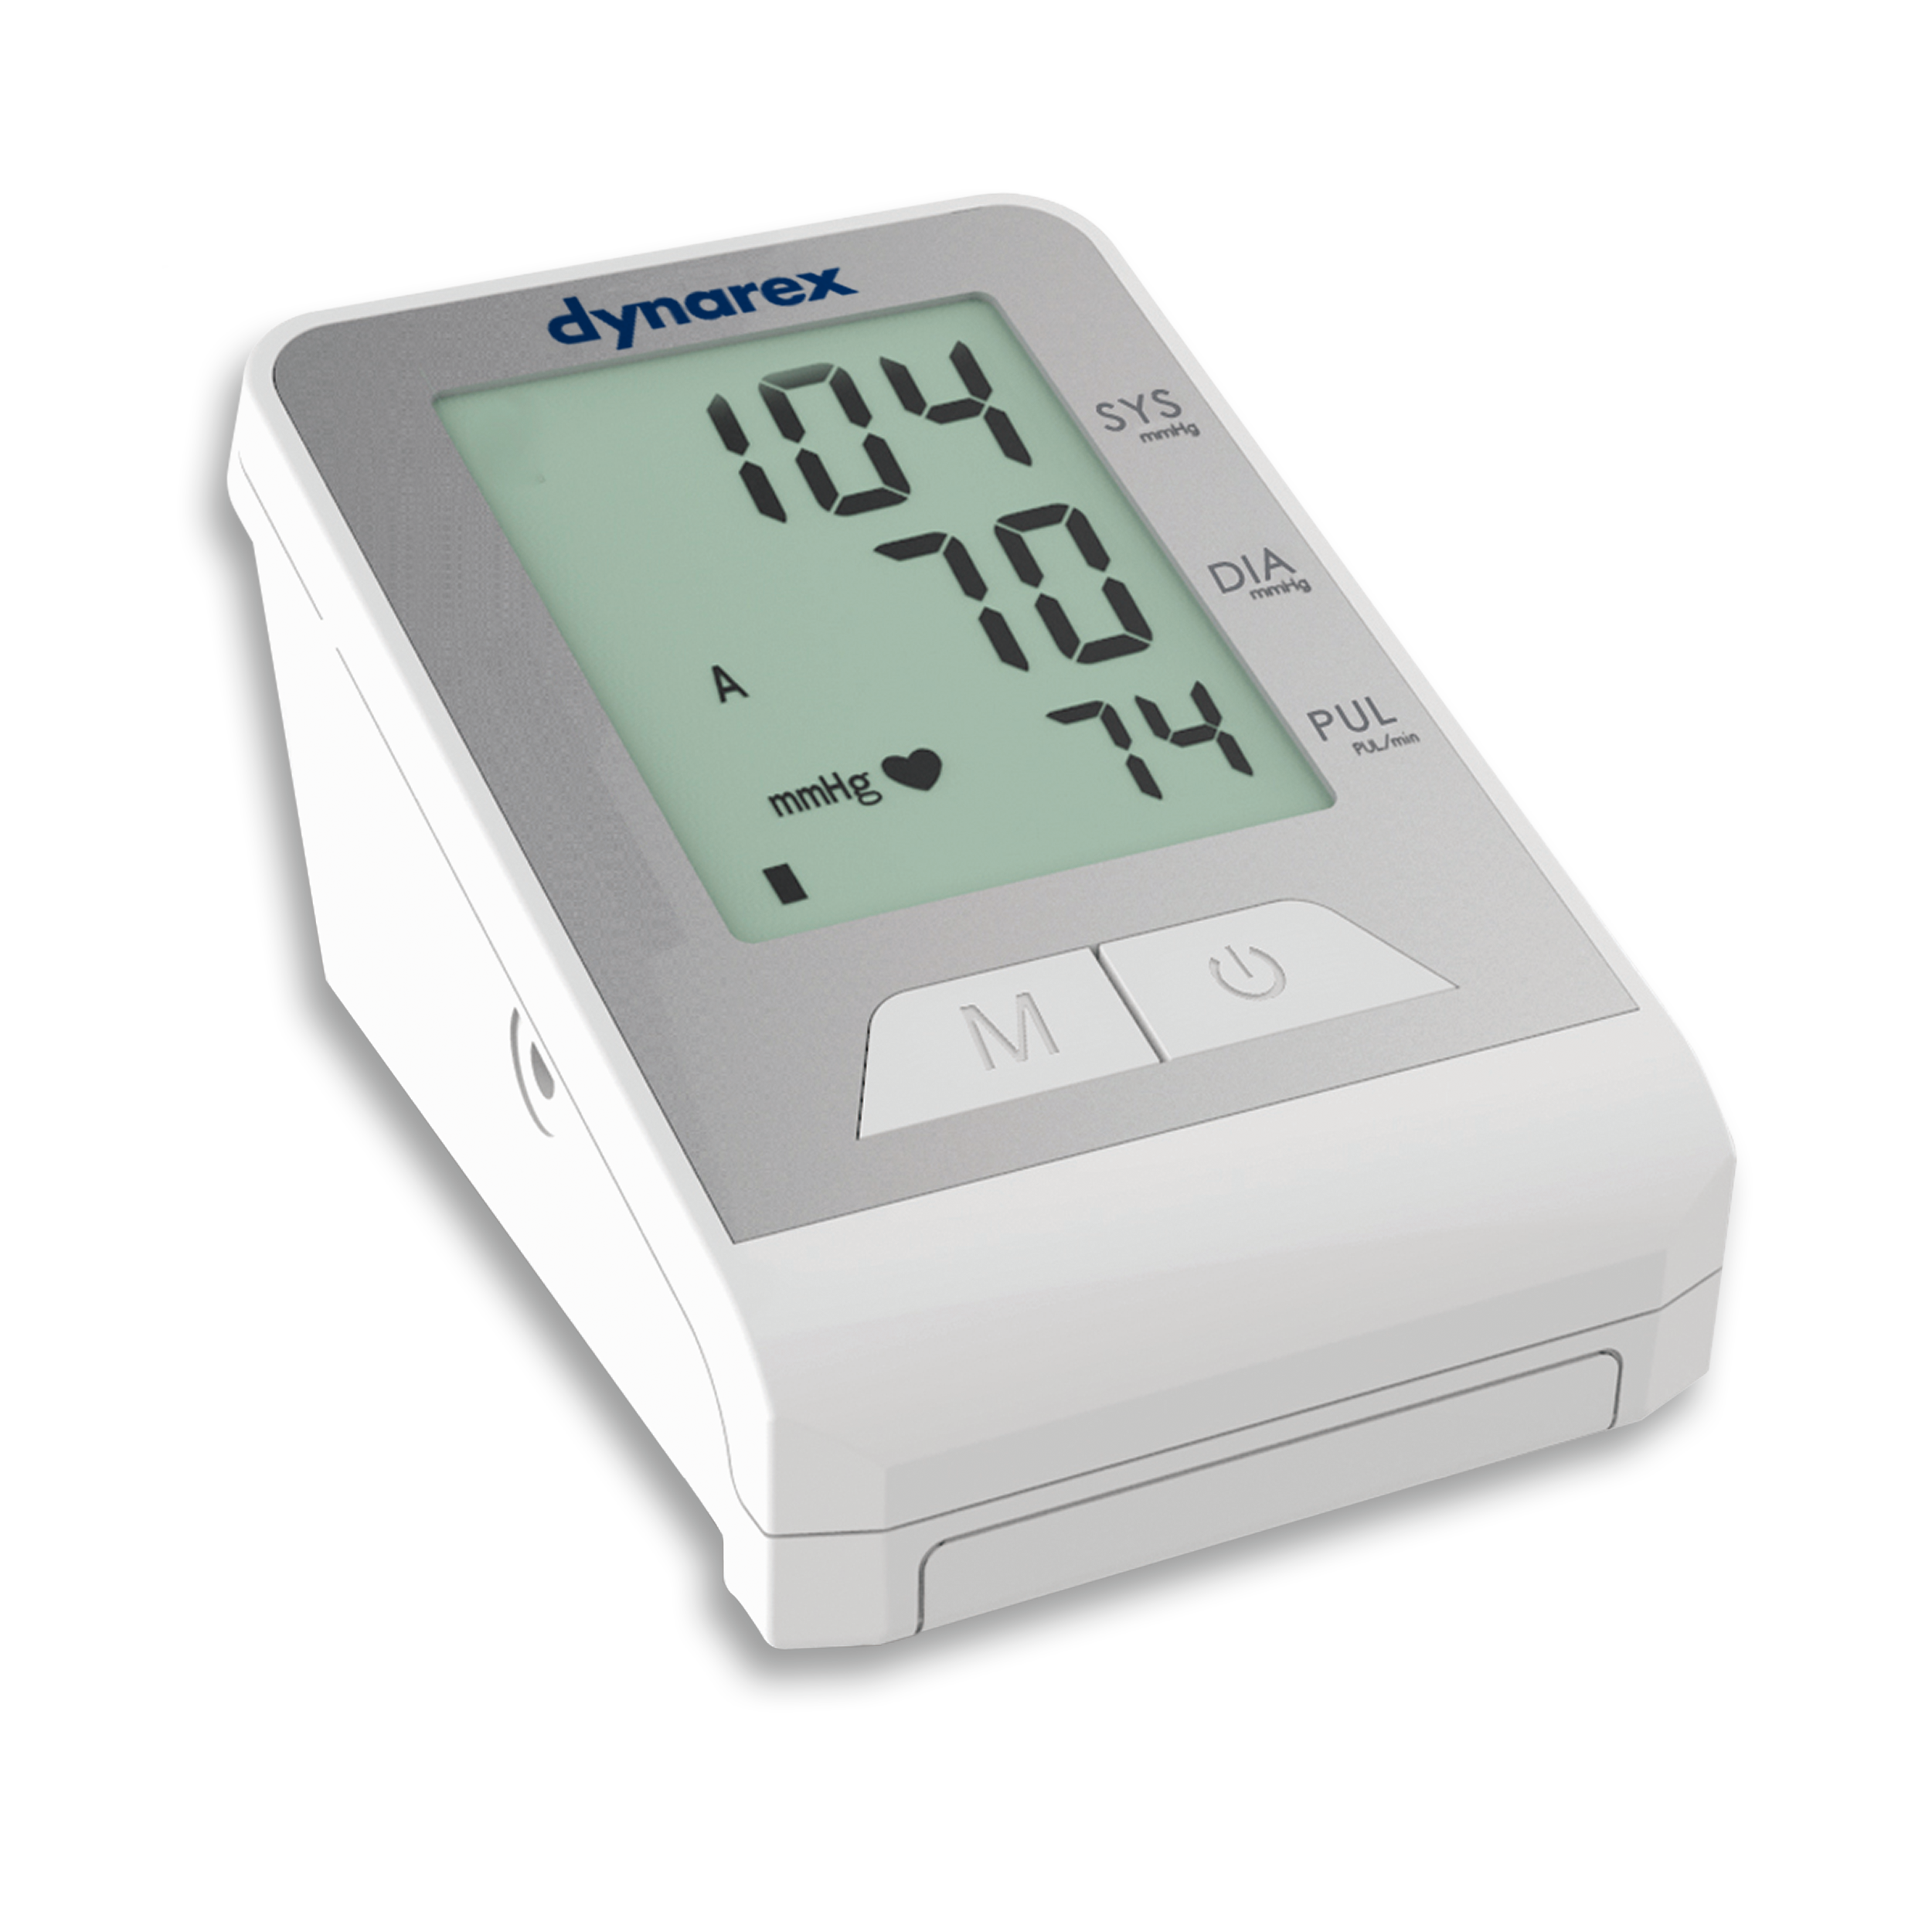 Dynarex Digital Blood Pressure Monitors 5 pk